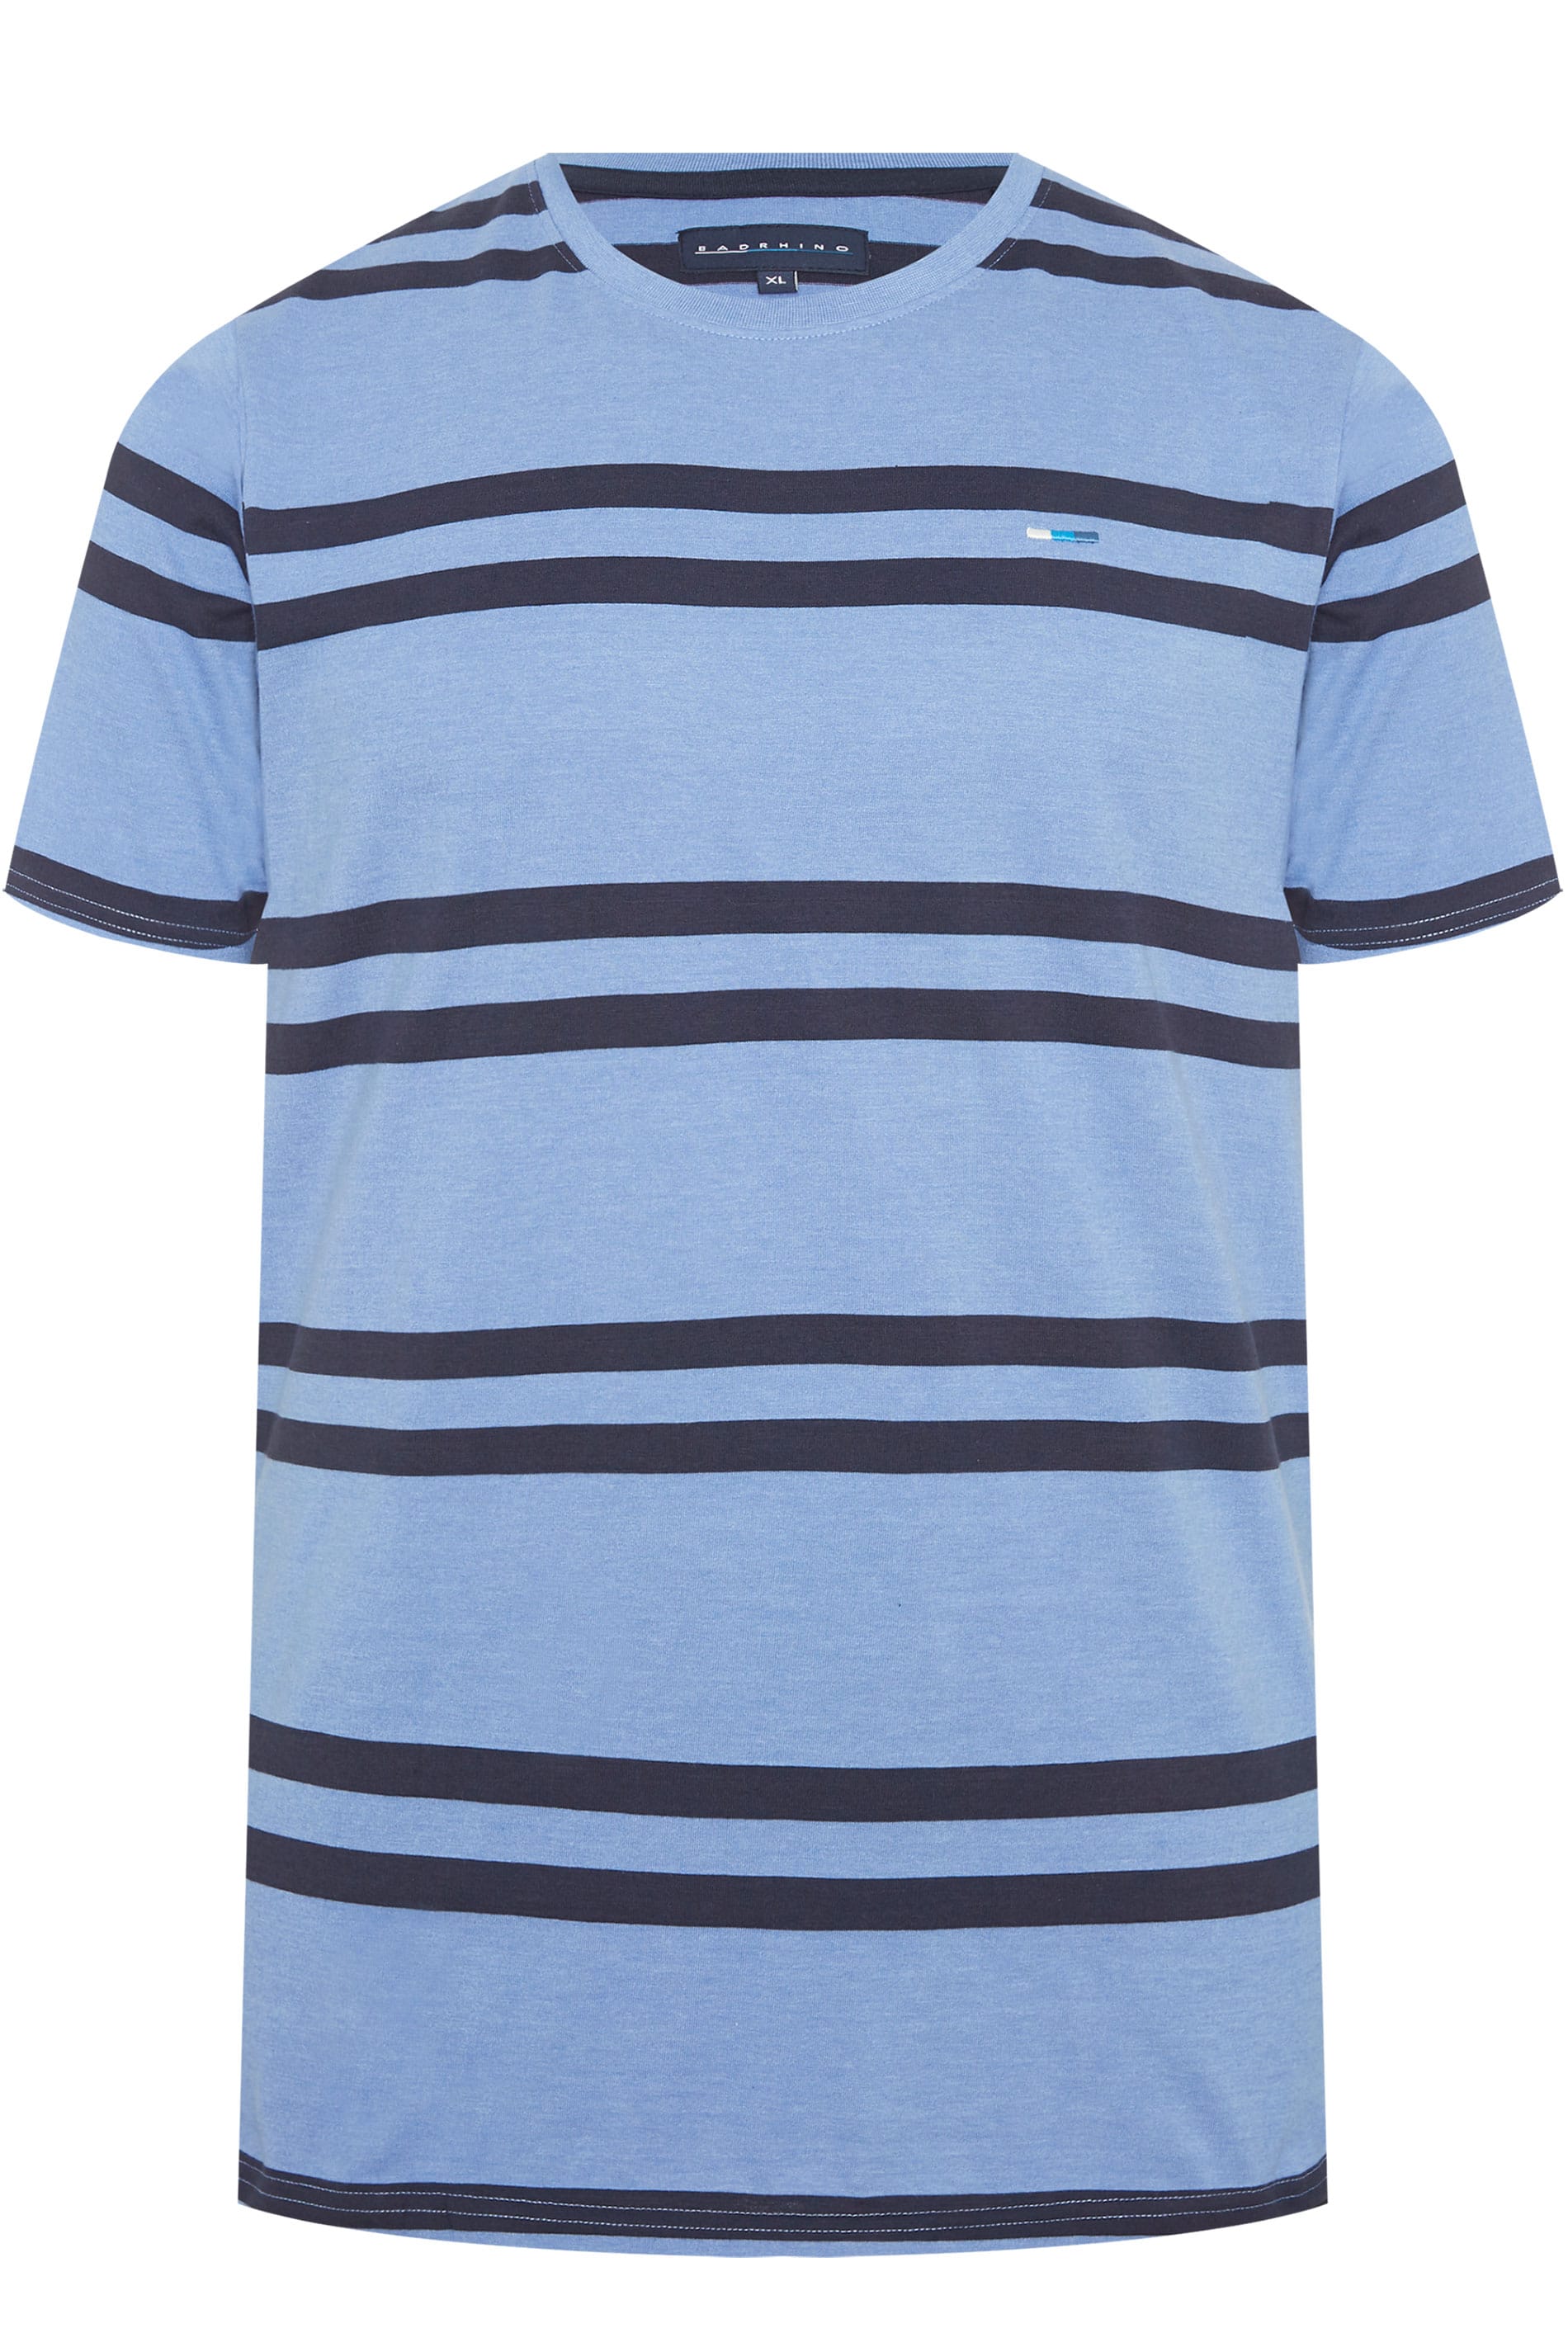 BadRhino Blue Double Stripe T-Shirt_dfe8.jpg